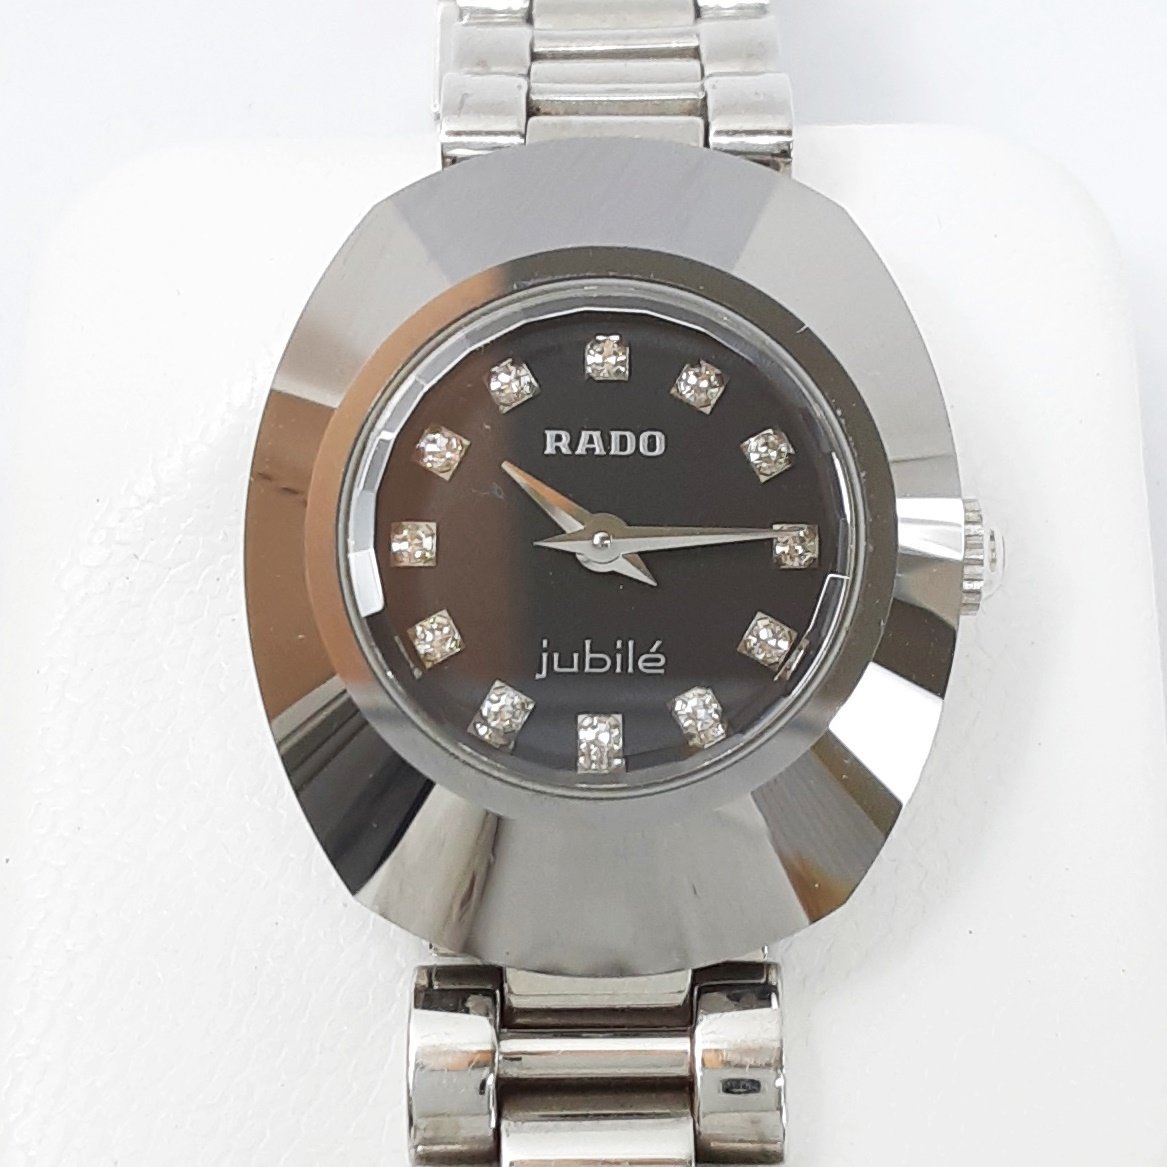 RADO DIASTAR jubile ラドー ダイヤスター ジュビリー 963.0558.3 時計 腕時計 稼働 シルバー -  clicvendas.com